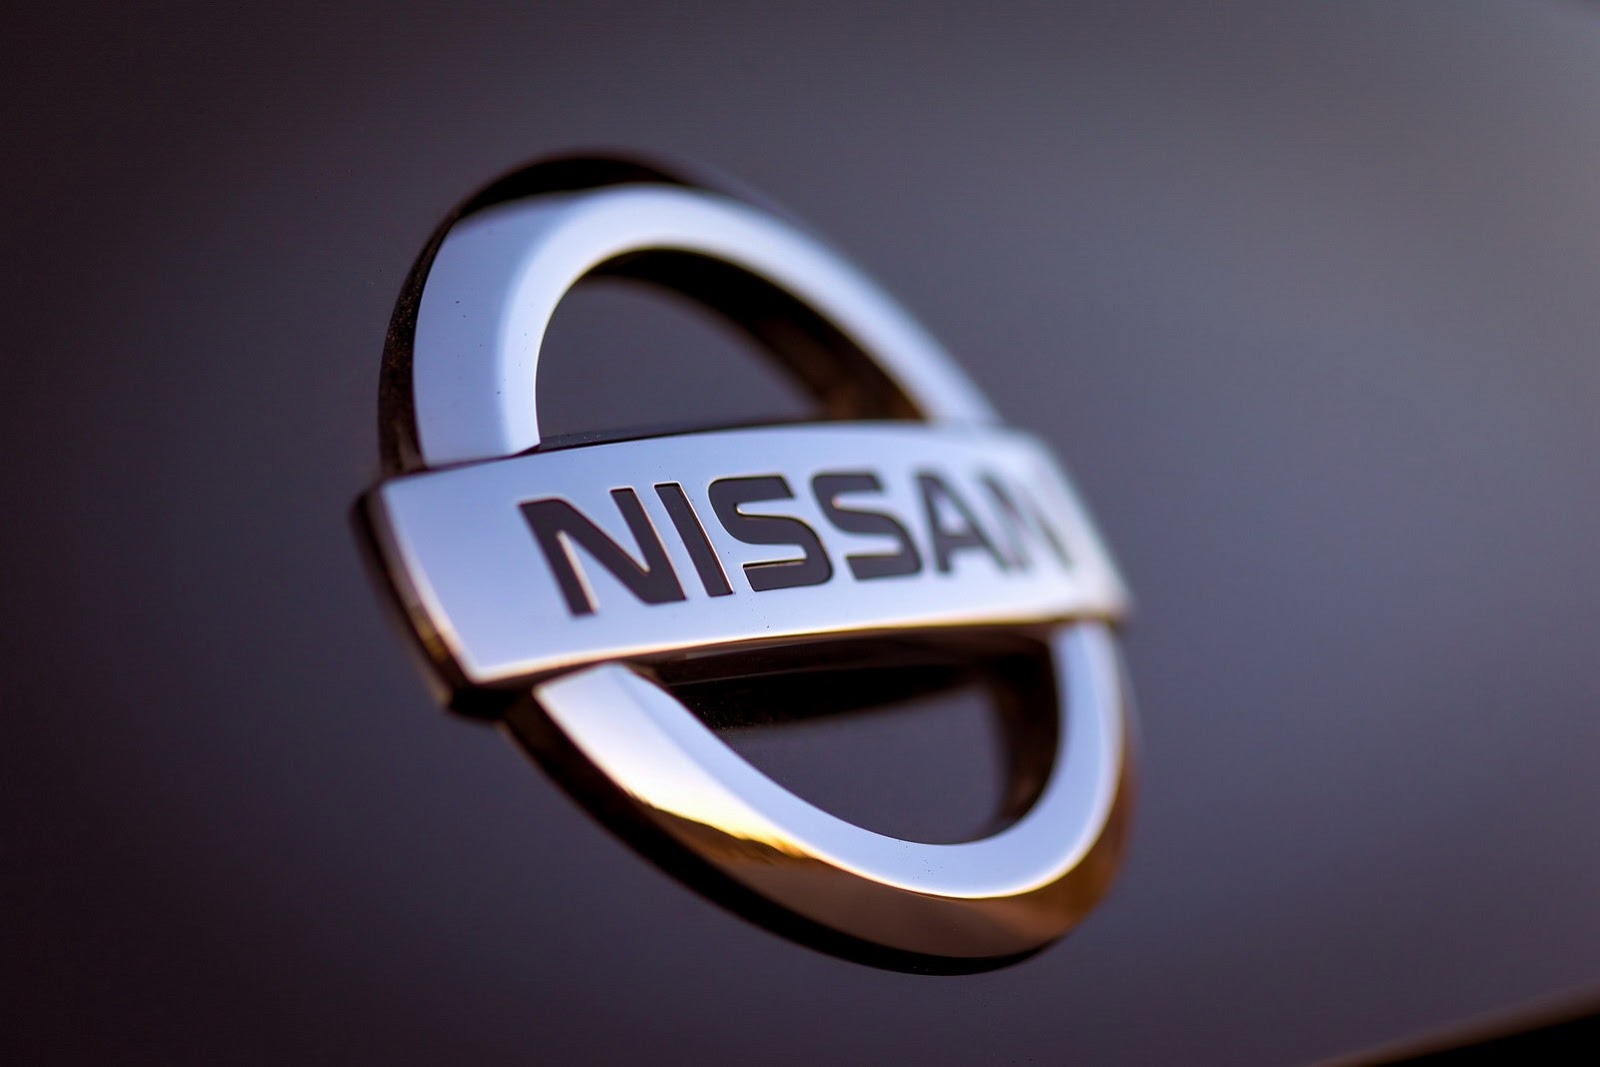 Nissan Logo Wallpaper Image